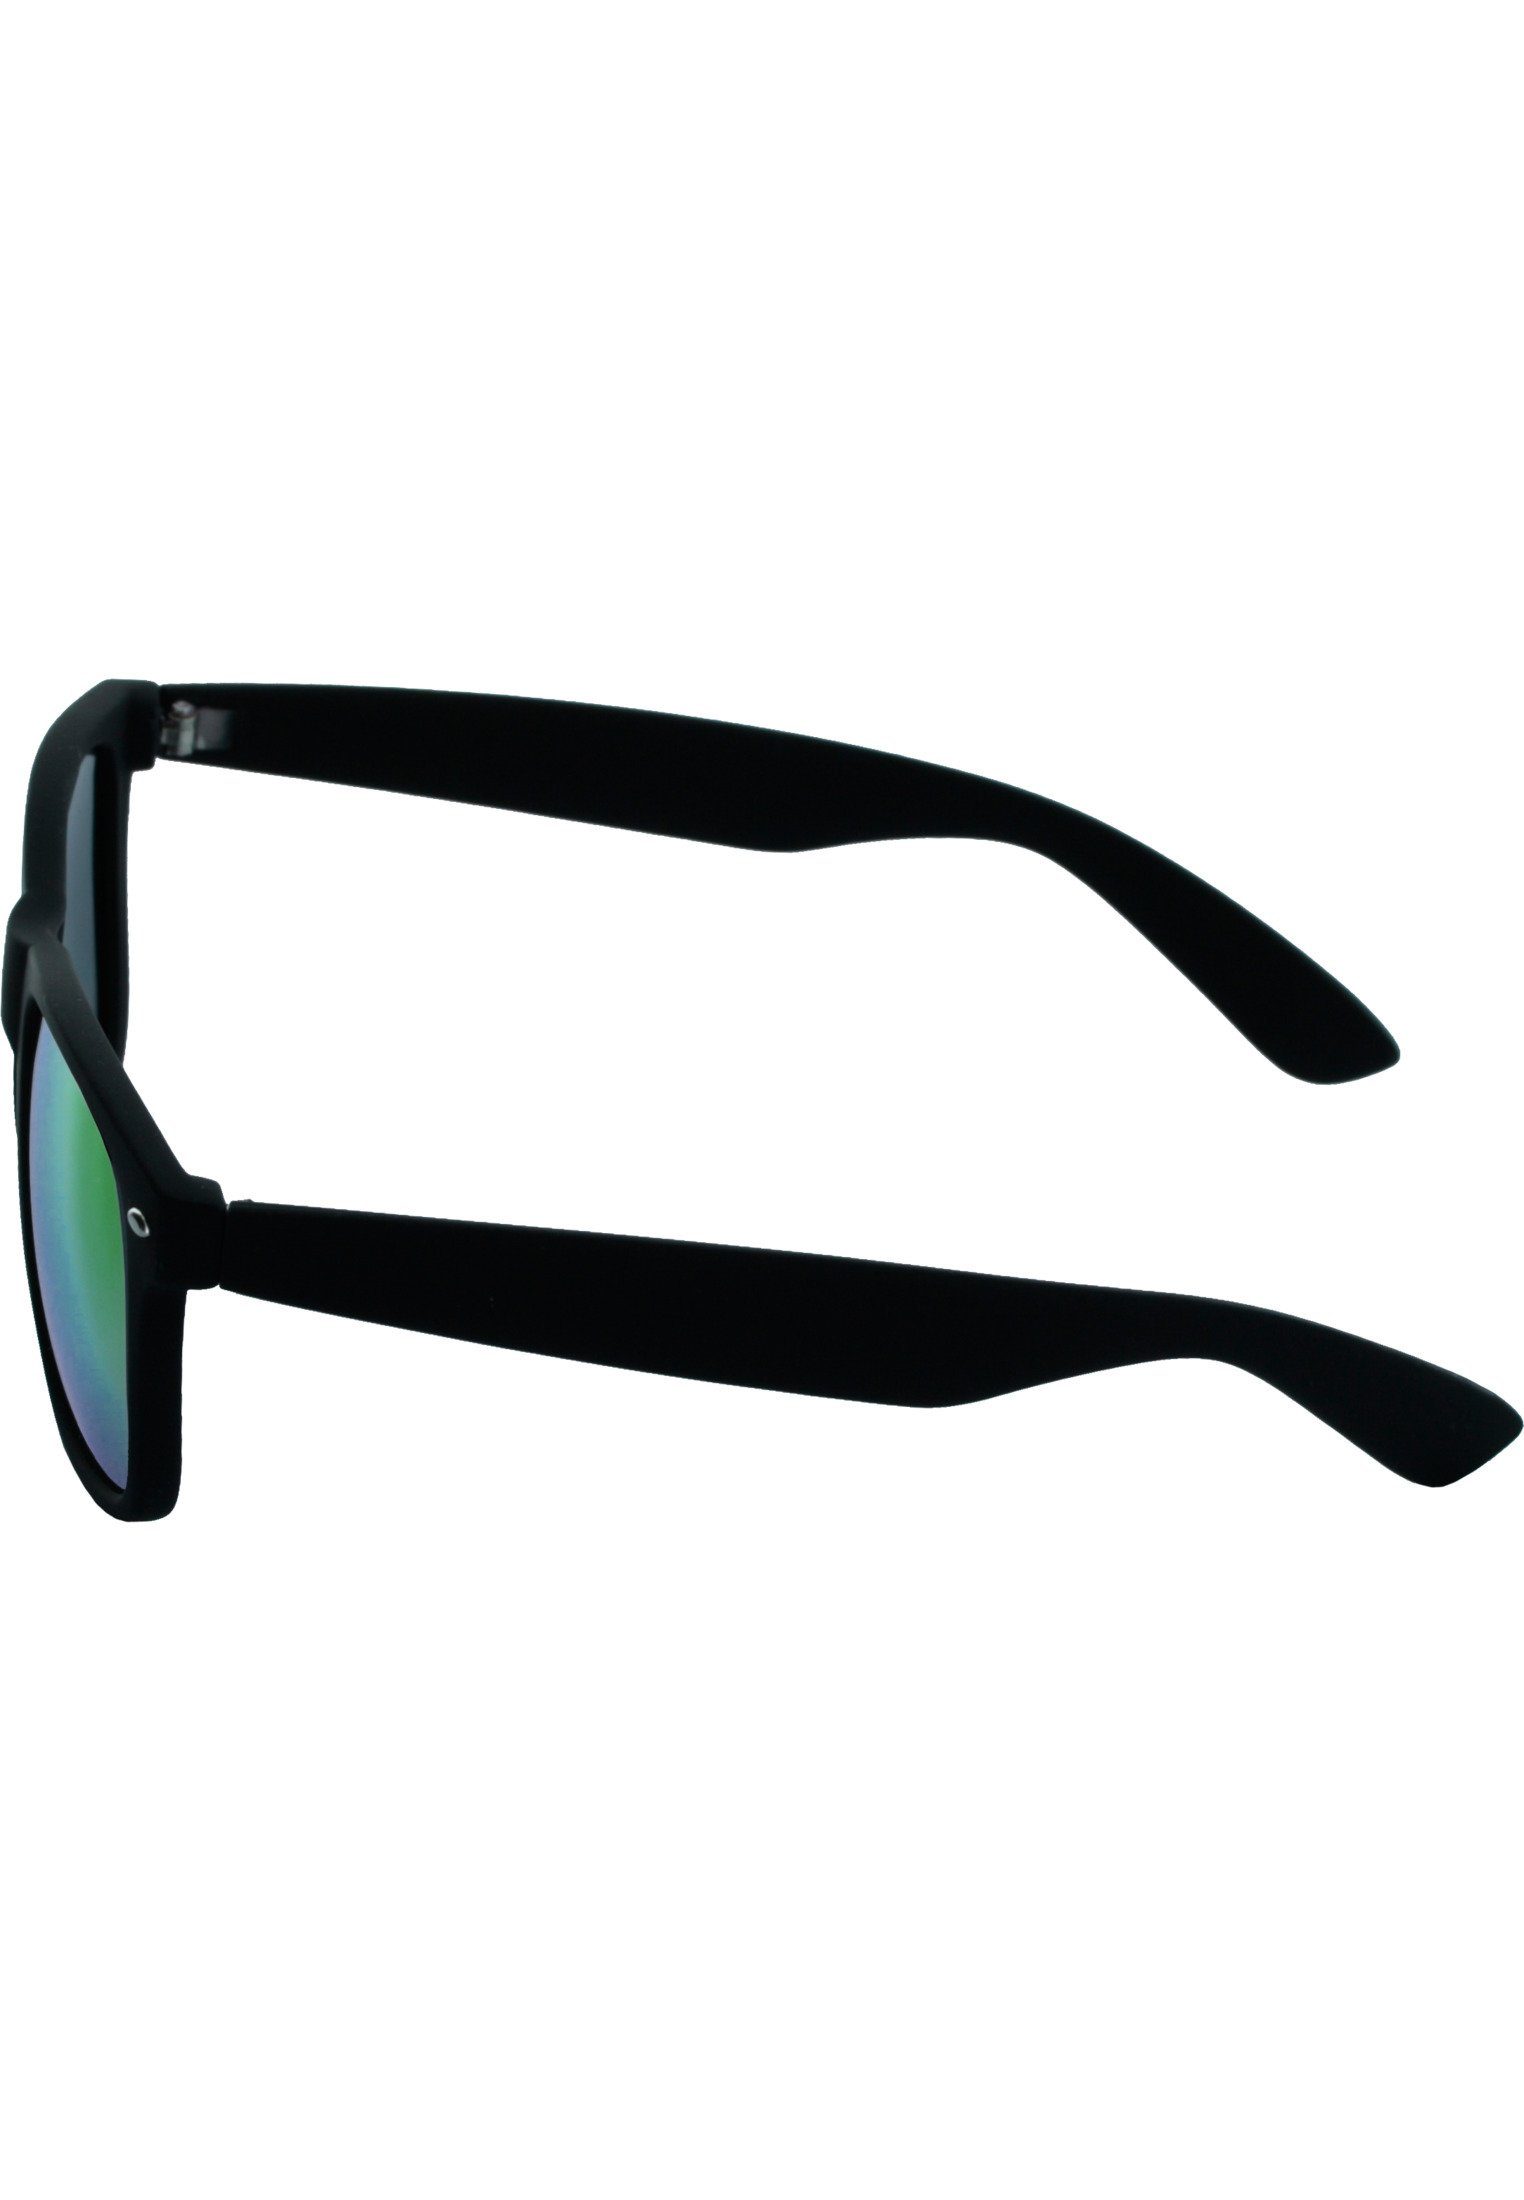 blk/blue Sunglasses Mirror Accessoires Likoma Sonnenbrille MSTRDS